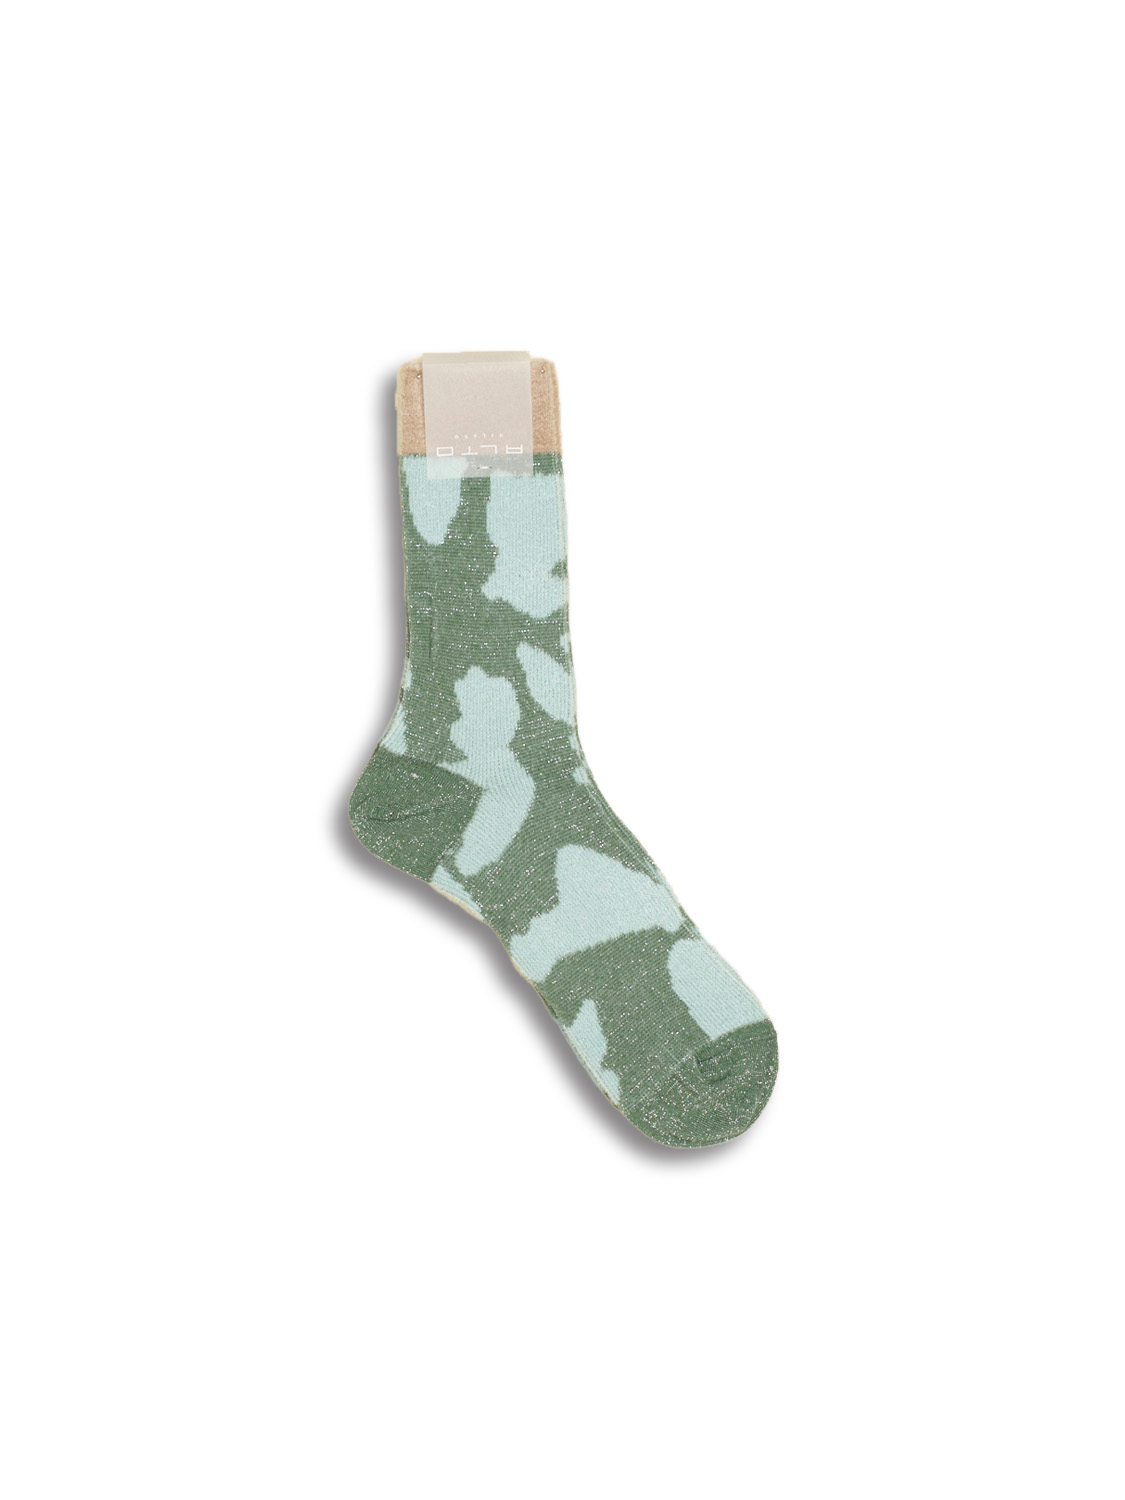  Amelia Corto - Socks with patch design